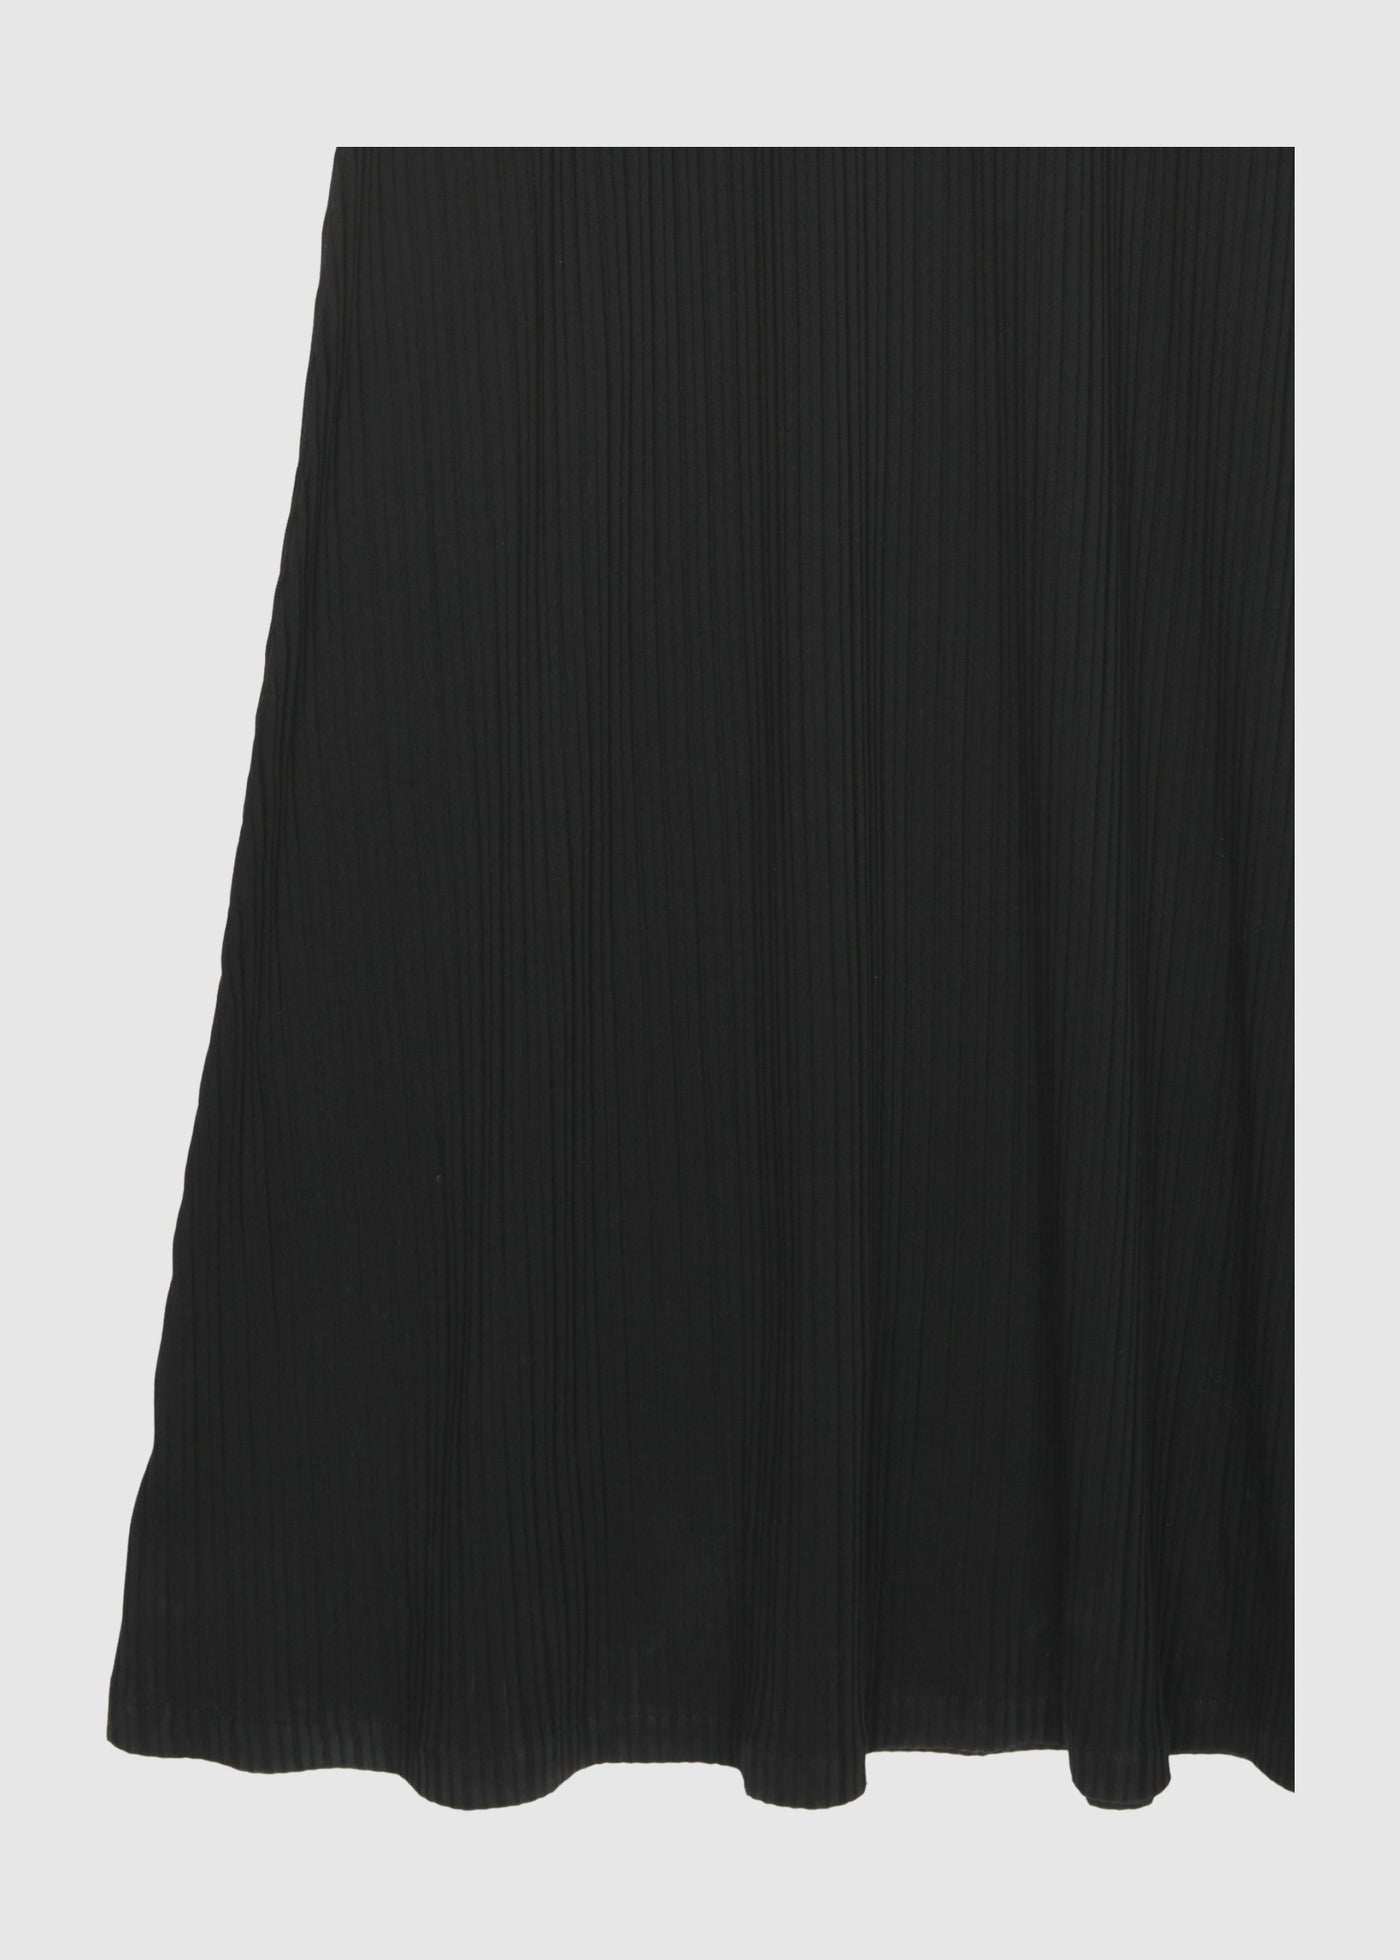 TURTLENECK DRESS RORY RIB BLACK